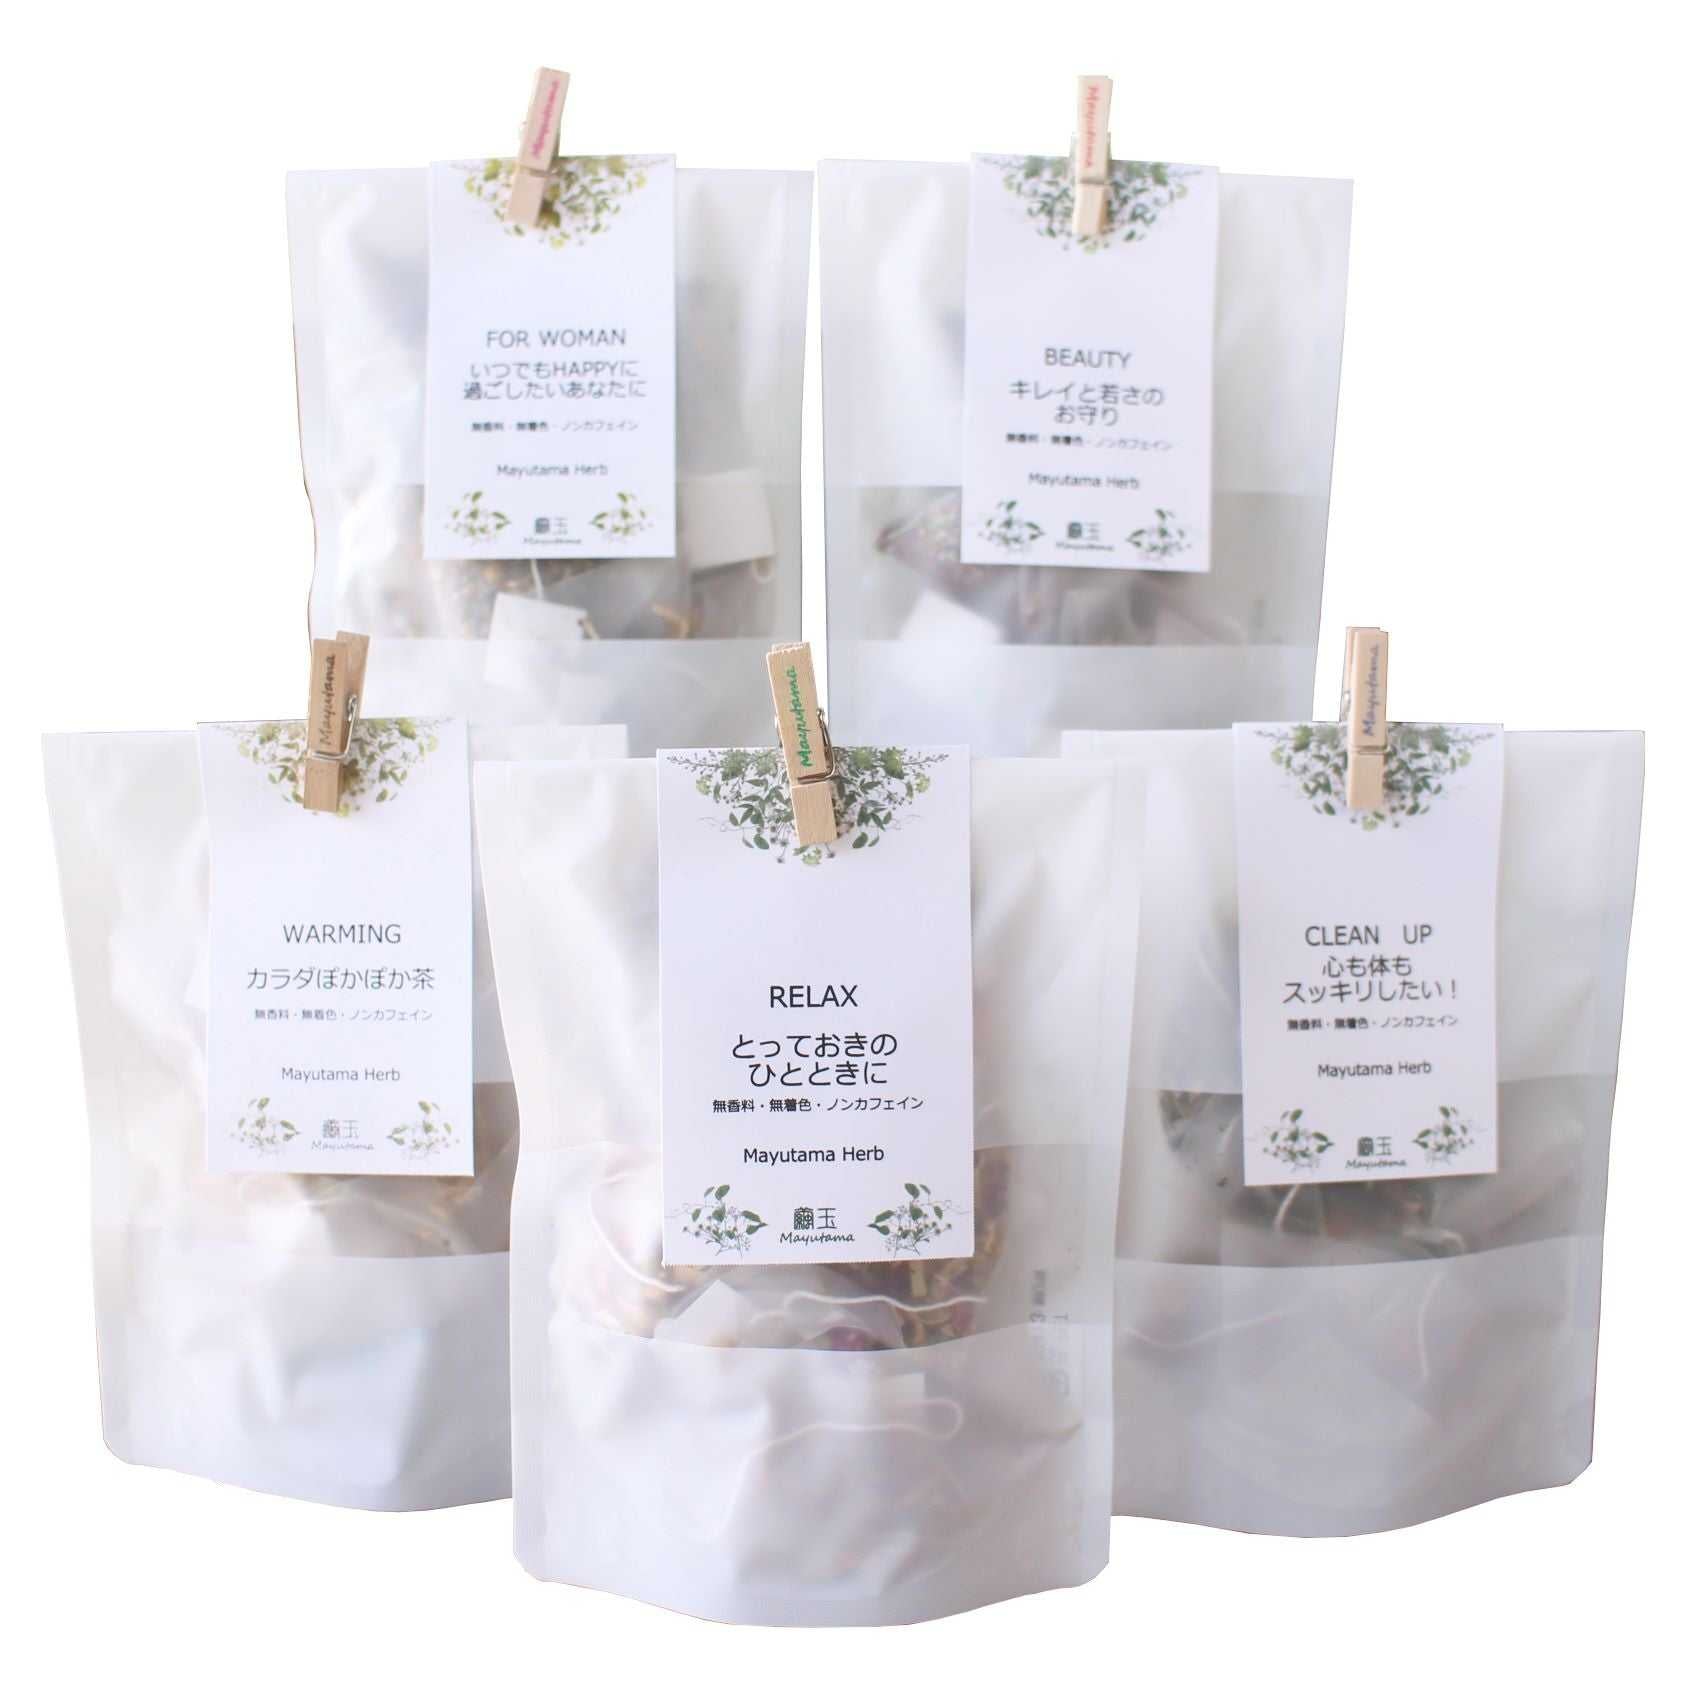 Mayutama’s Japanese Original Blend Herbal Tea Bag Set (set of 5 or 3)